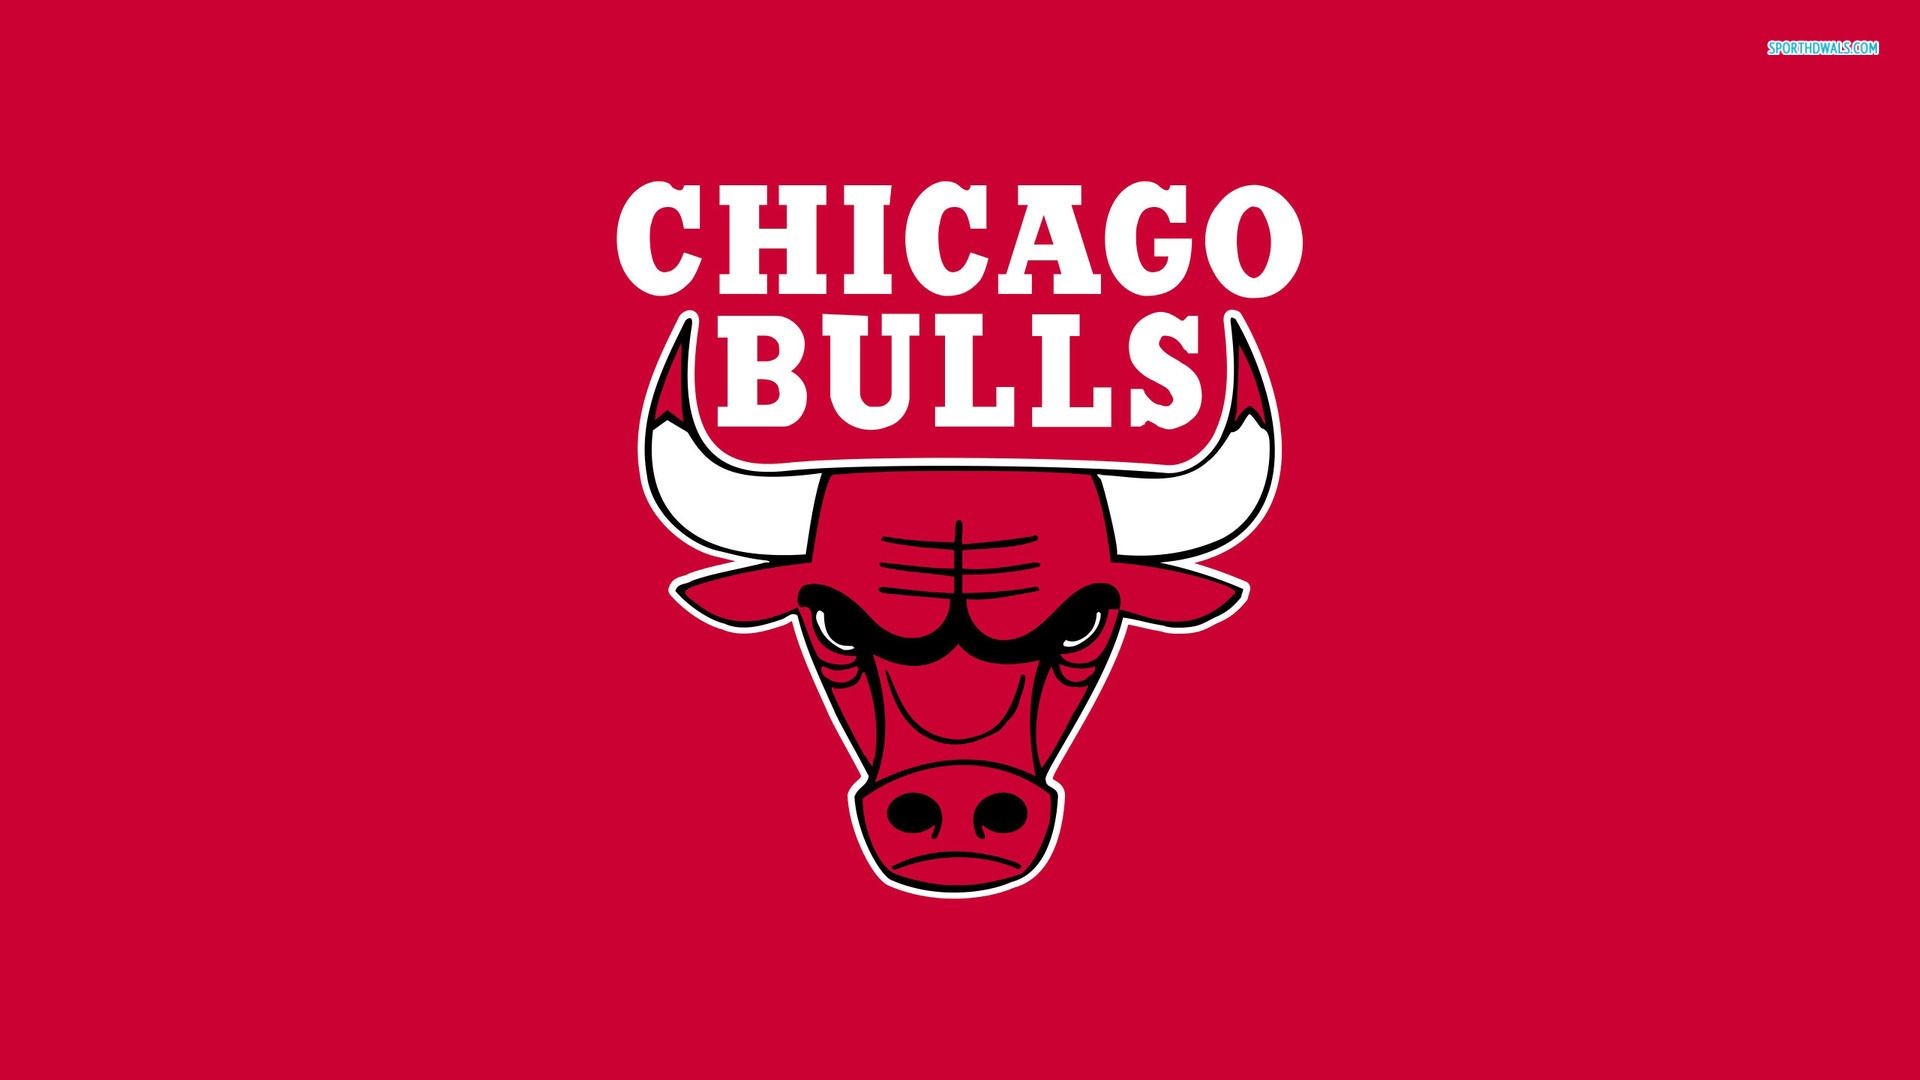 Chicago Bulls Wallpaper Free